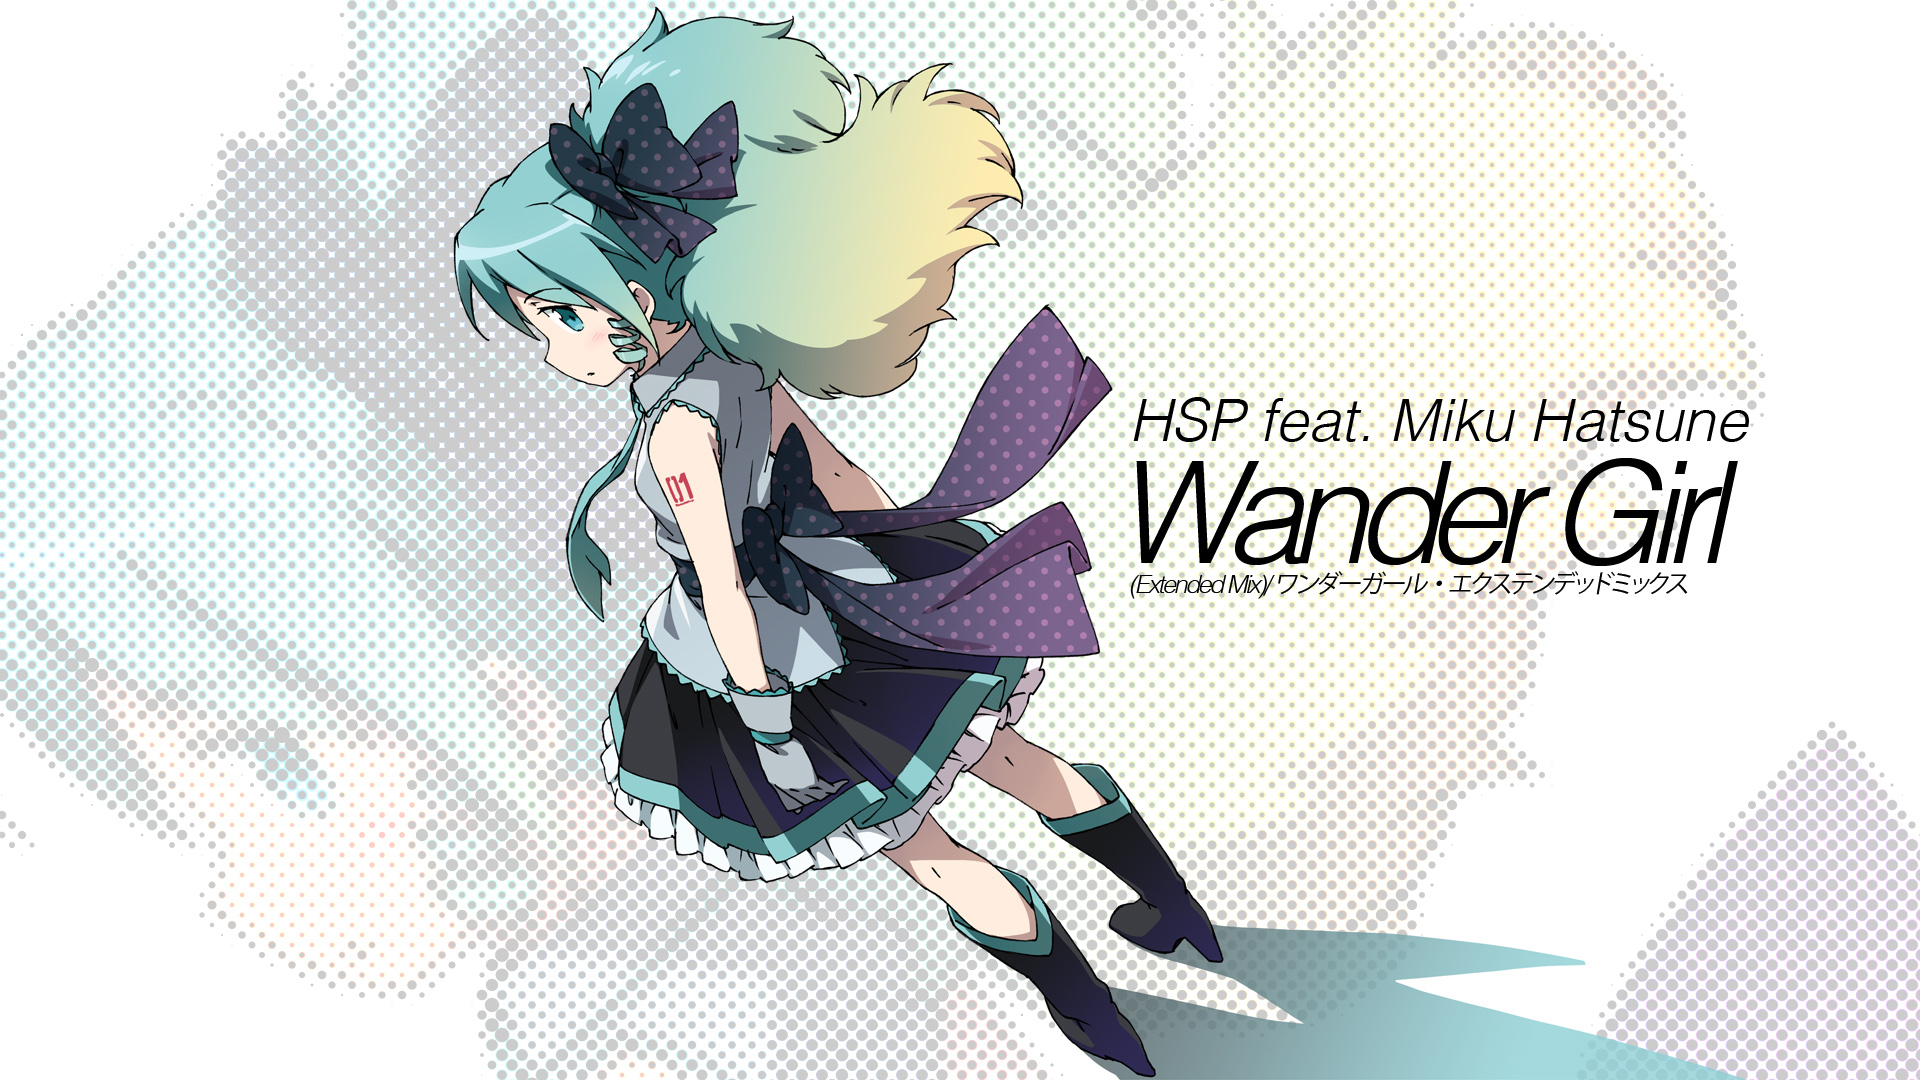 Wander Girl by Kanzaki (かんざき)